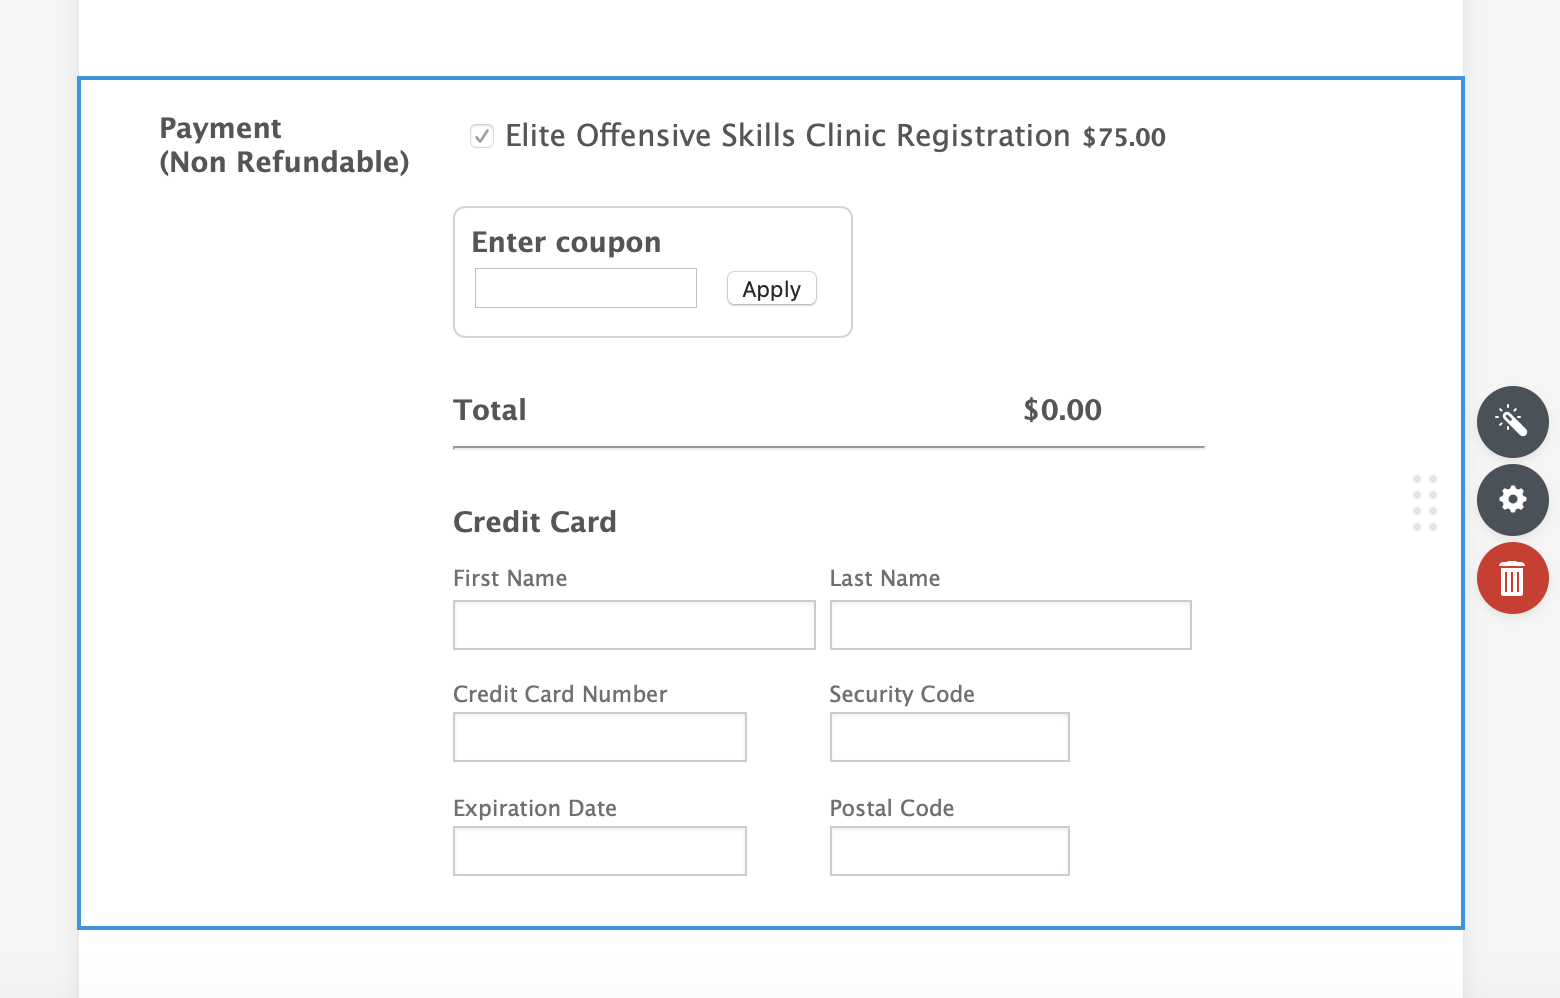 Payment Field How To Change Label Postal Code To Zip Code